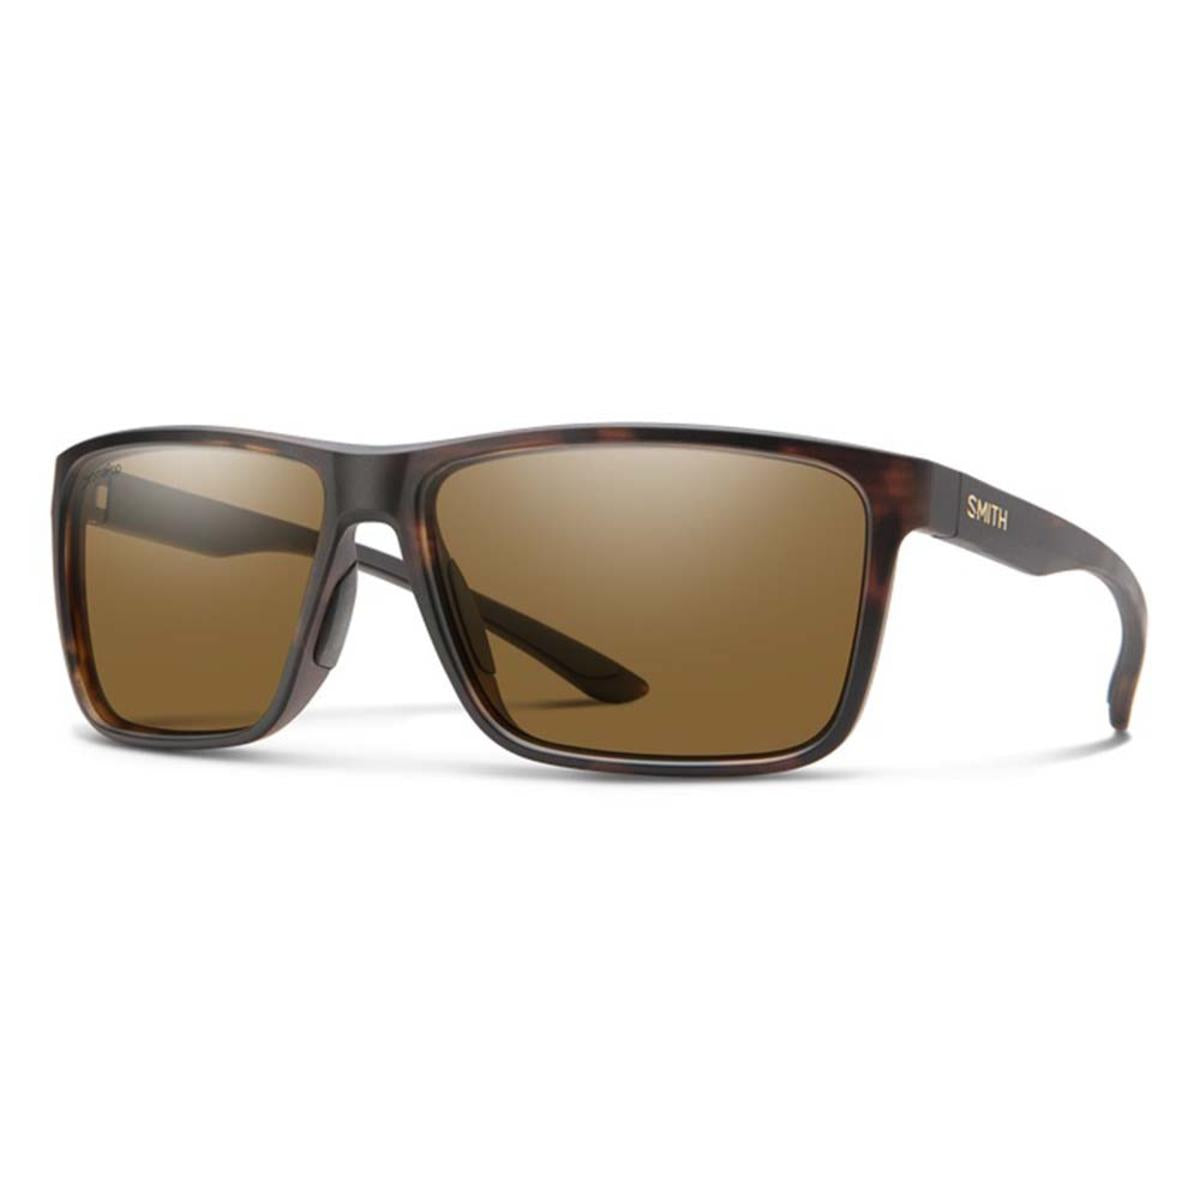 Smith Optics Riptide Sunglasses ChromaPop Glass Polarized Brown Mirror - Matte Tortoise Frame